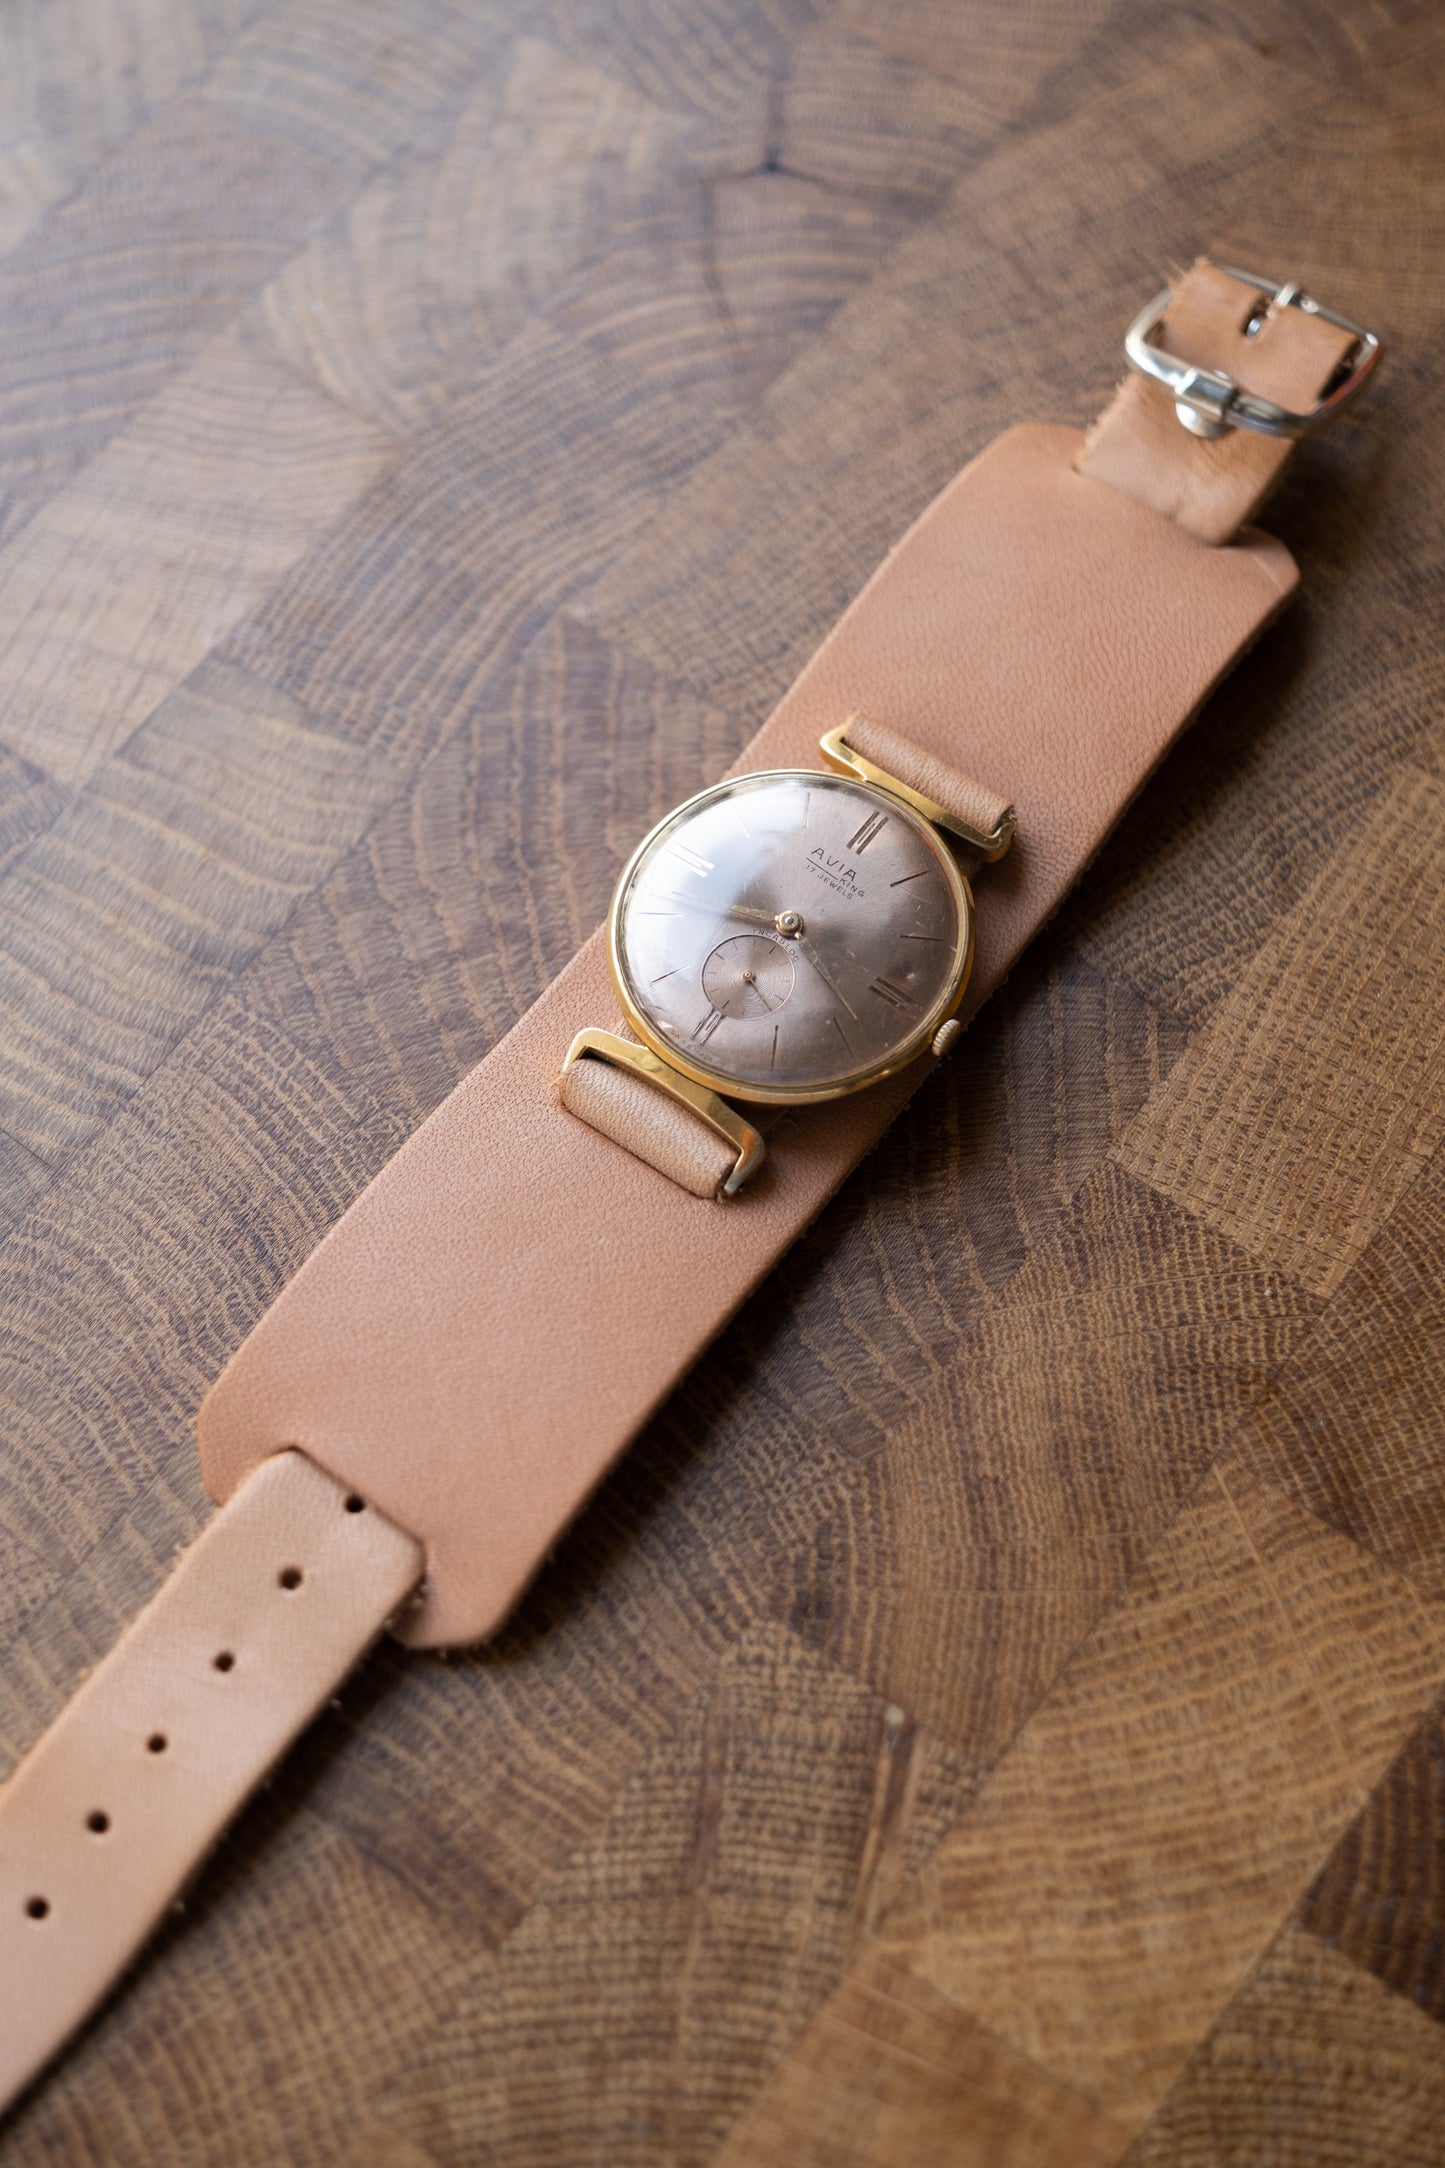 Avia King 17 Jewels Incabloc Swiss Made Vintage Watch